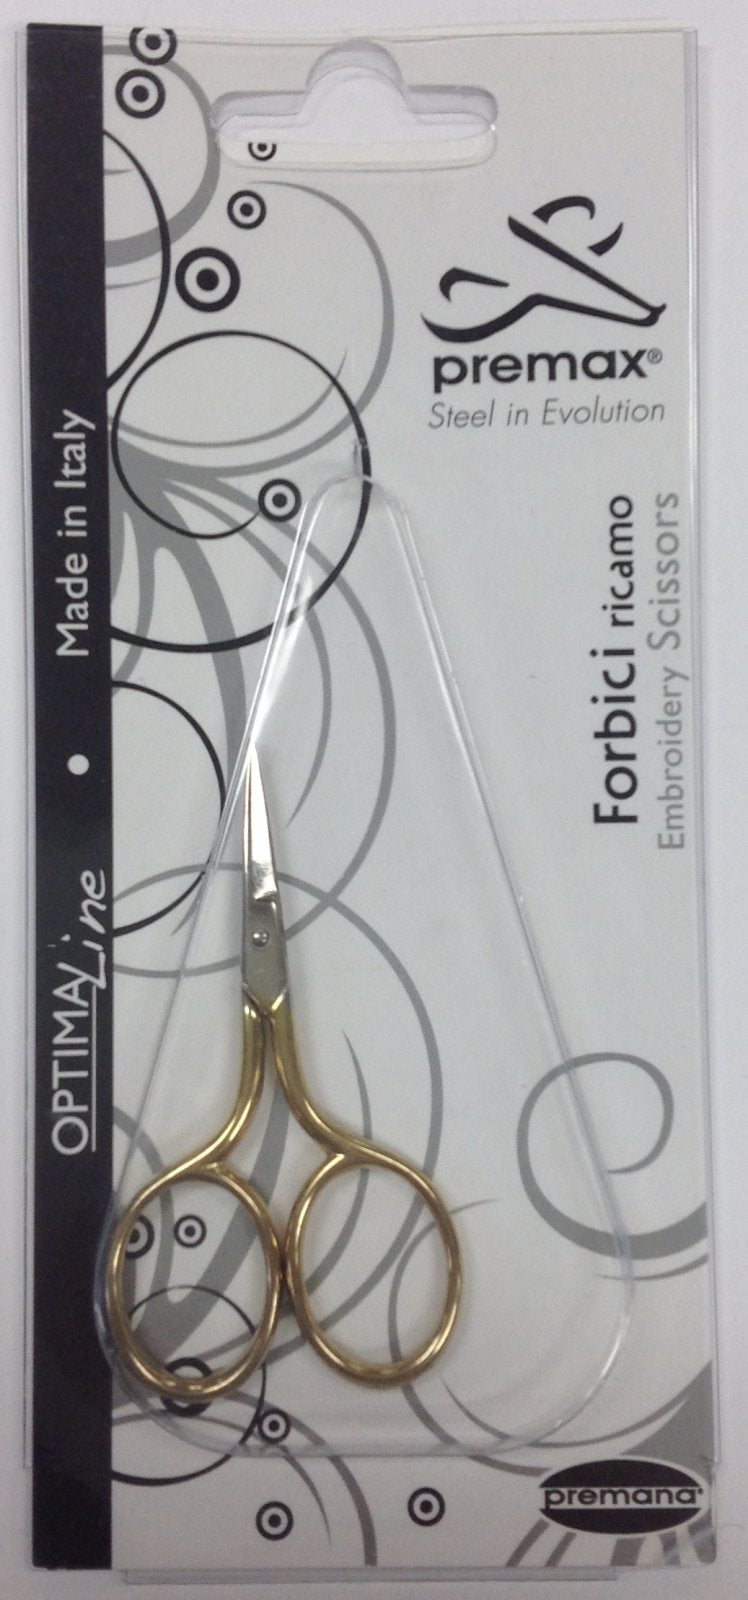 oremax embroidery gold scissors